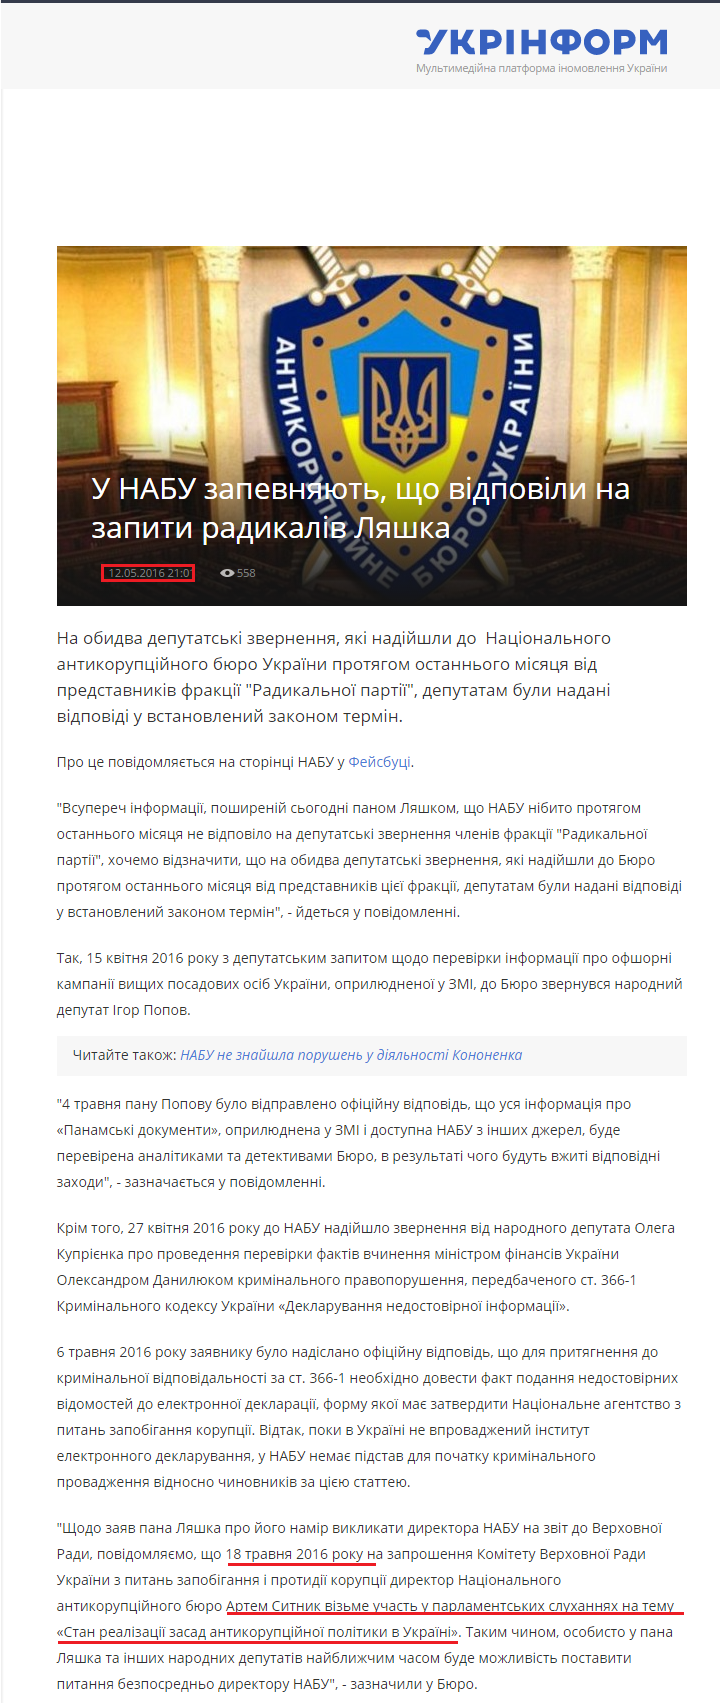 http://www.ukrinform.ua/rubric-politycs/2016088-u-nabu-zapevnaut-so-vidpovili-na-zapiti-radikaliv-laska.html